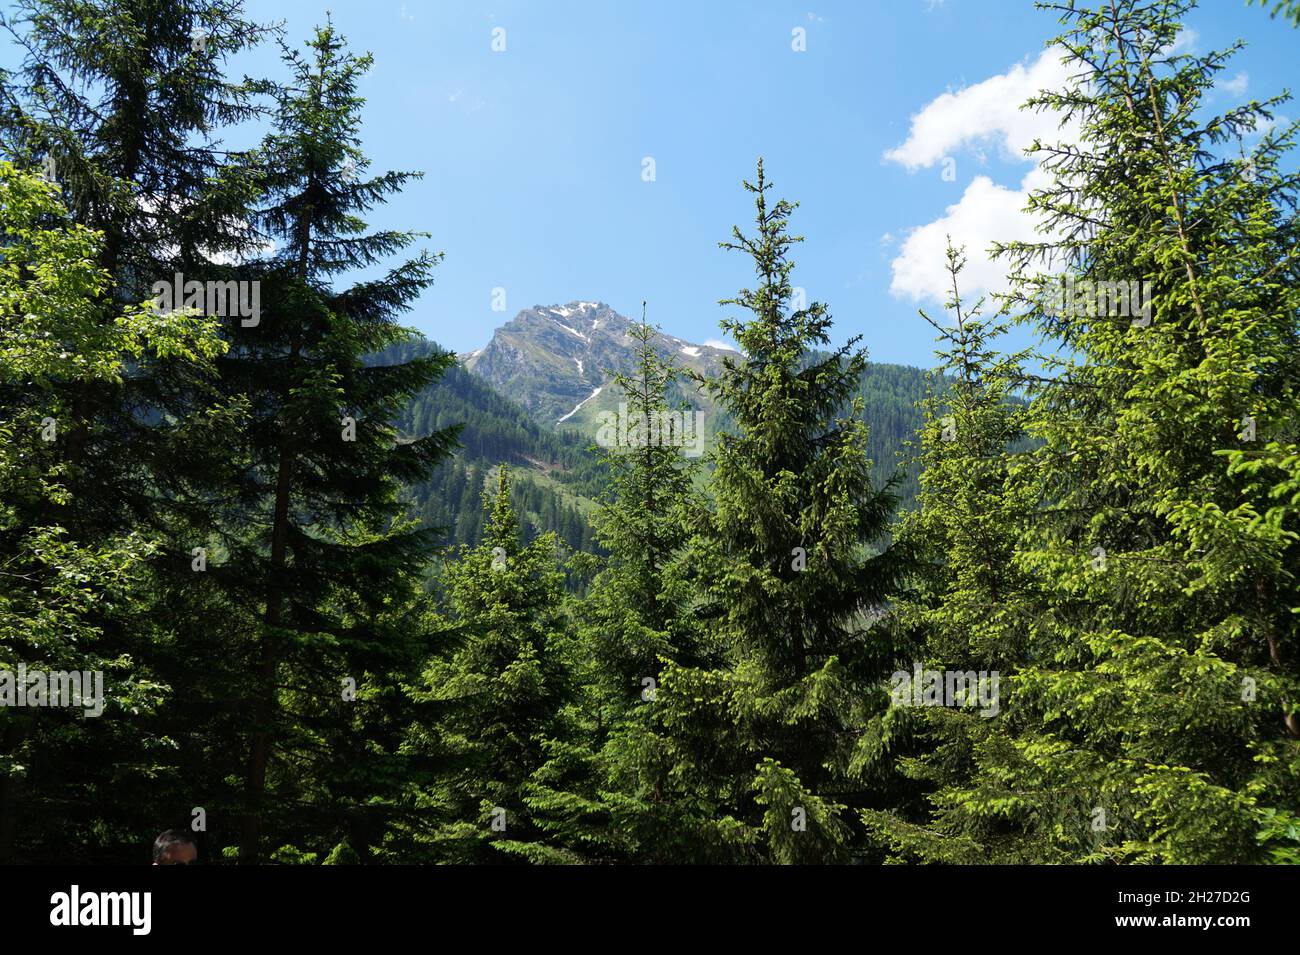 beautiful alpine landscape of the Schaldming-Dachstein region in Austria with alpine peak and tall fir trees Stock Photo